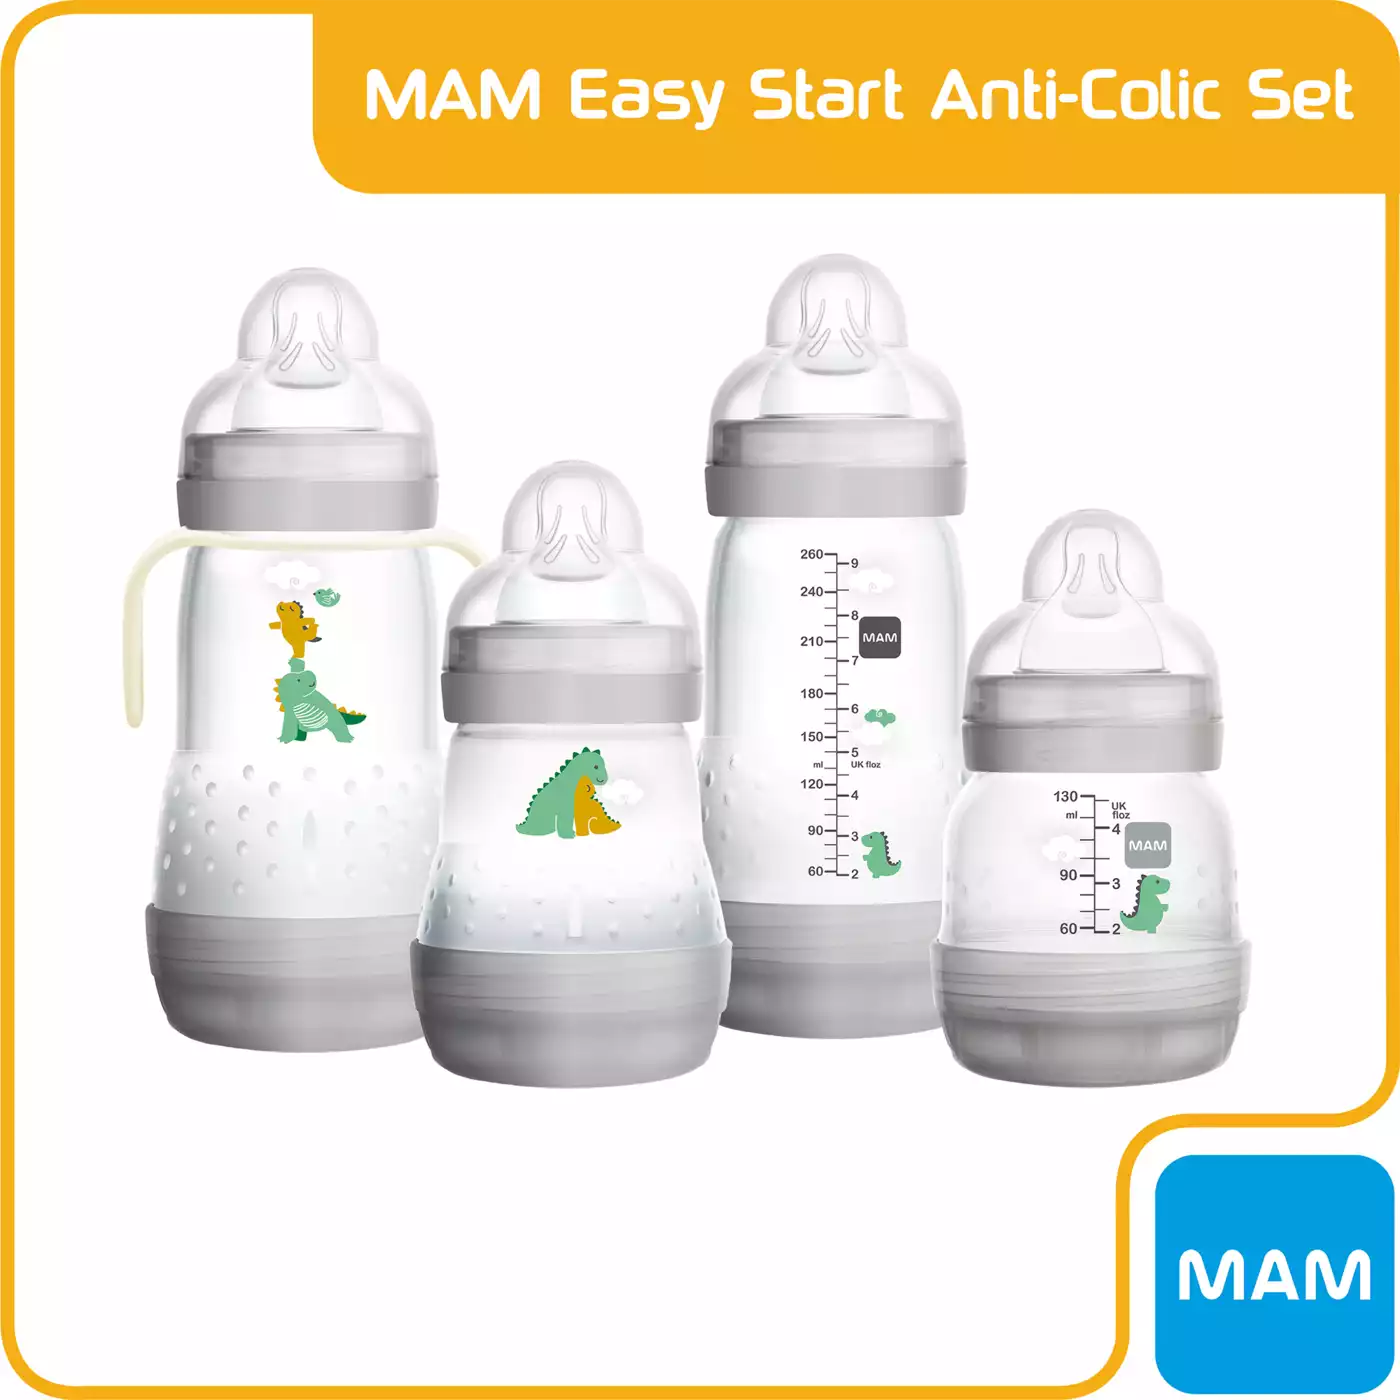 Easy Start Anti-Colic Set MAM 2000558108119 5